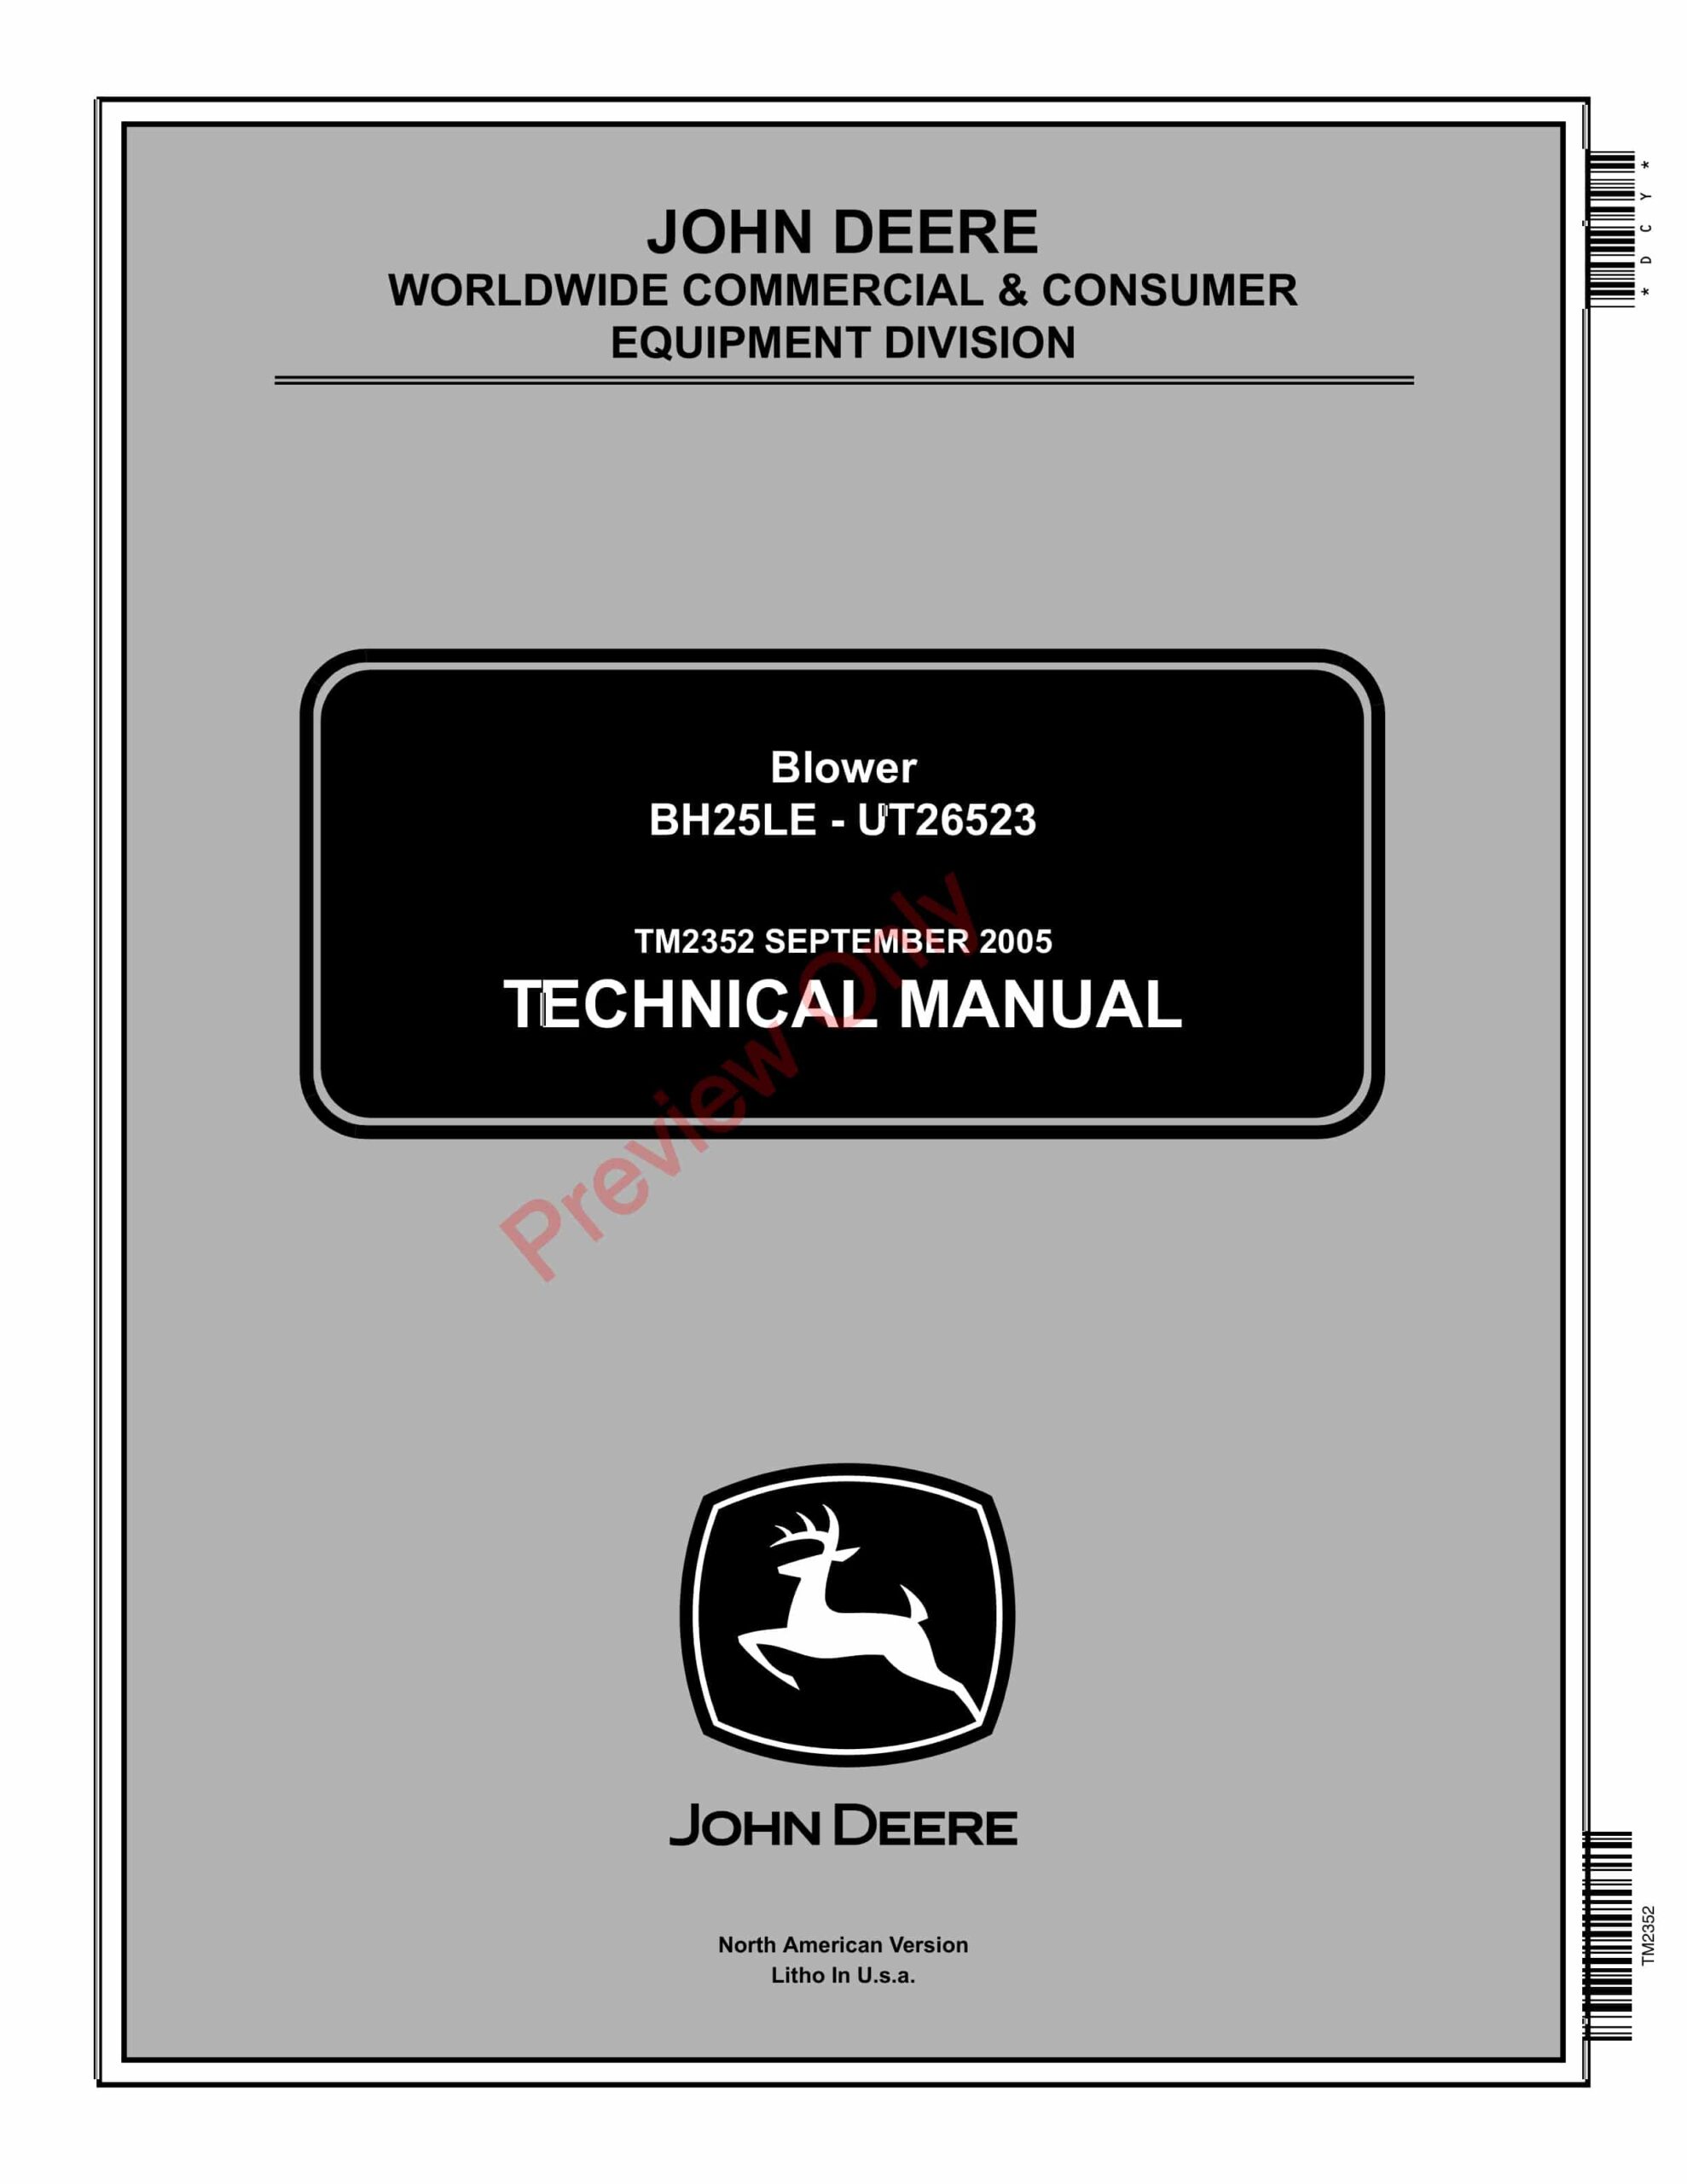 John Deere BH25LE – UT26523 Power Blower Technical Manual TM2352 01SEP05-1